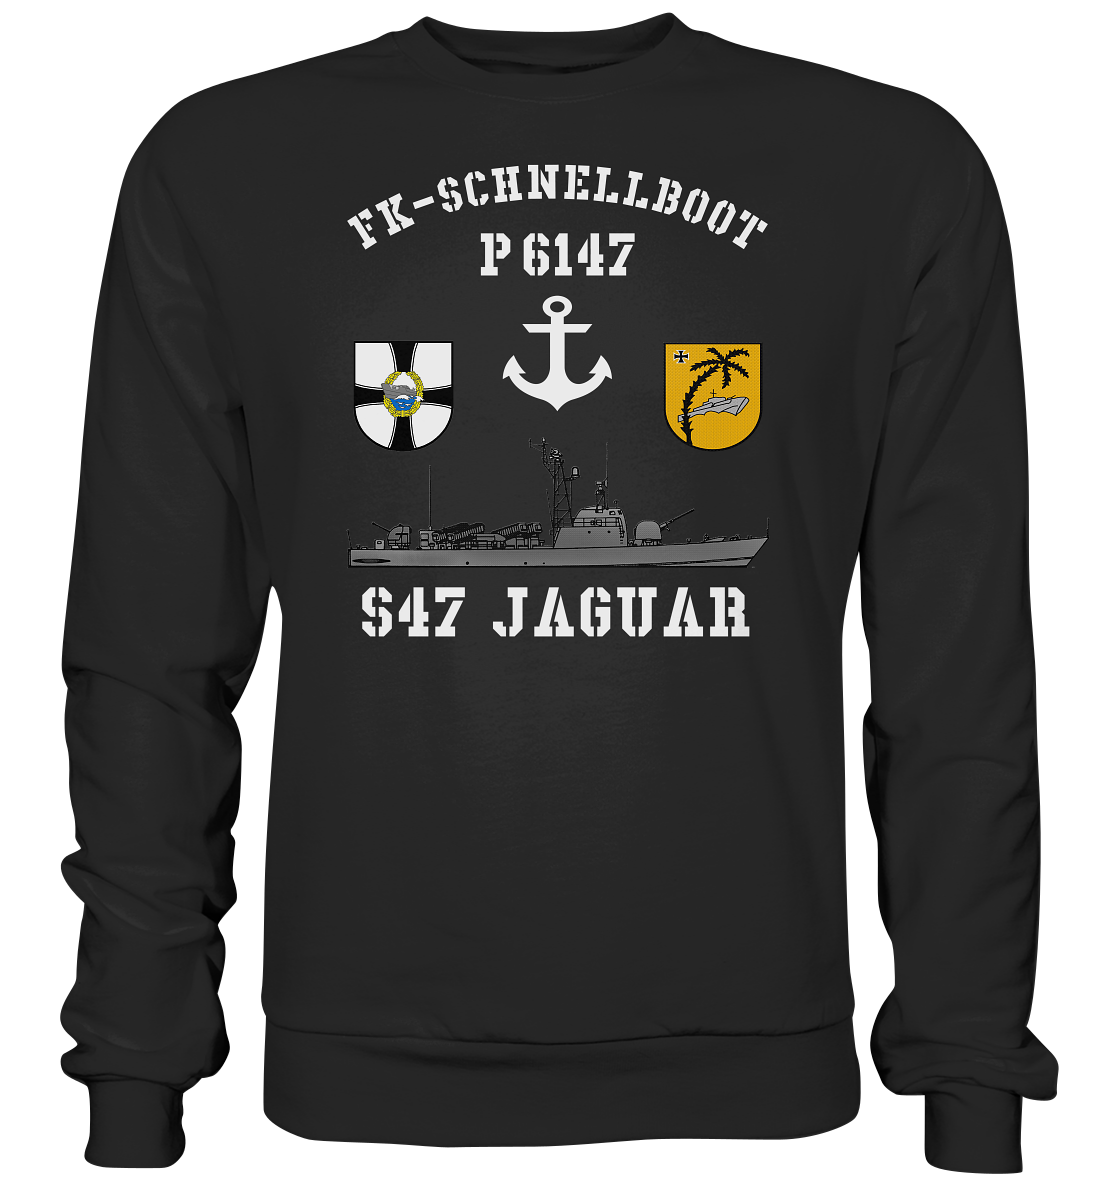 P6147 S47 JAGUAR - Premium Sweatshirt